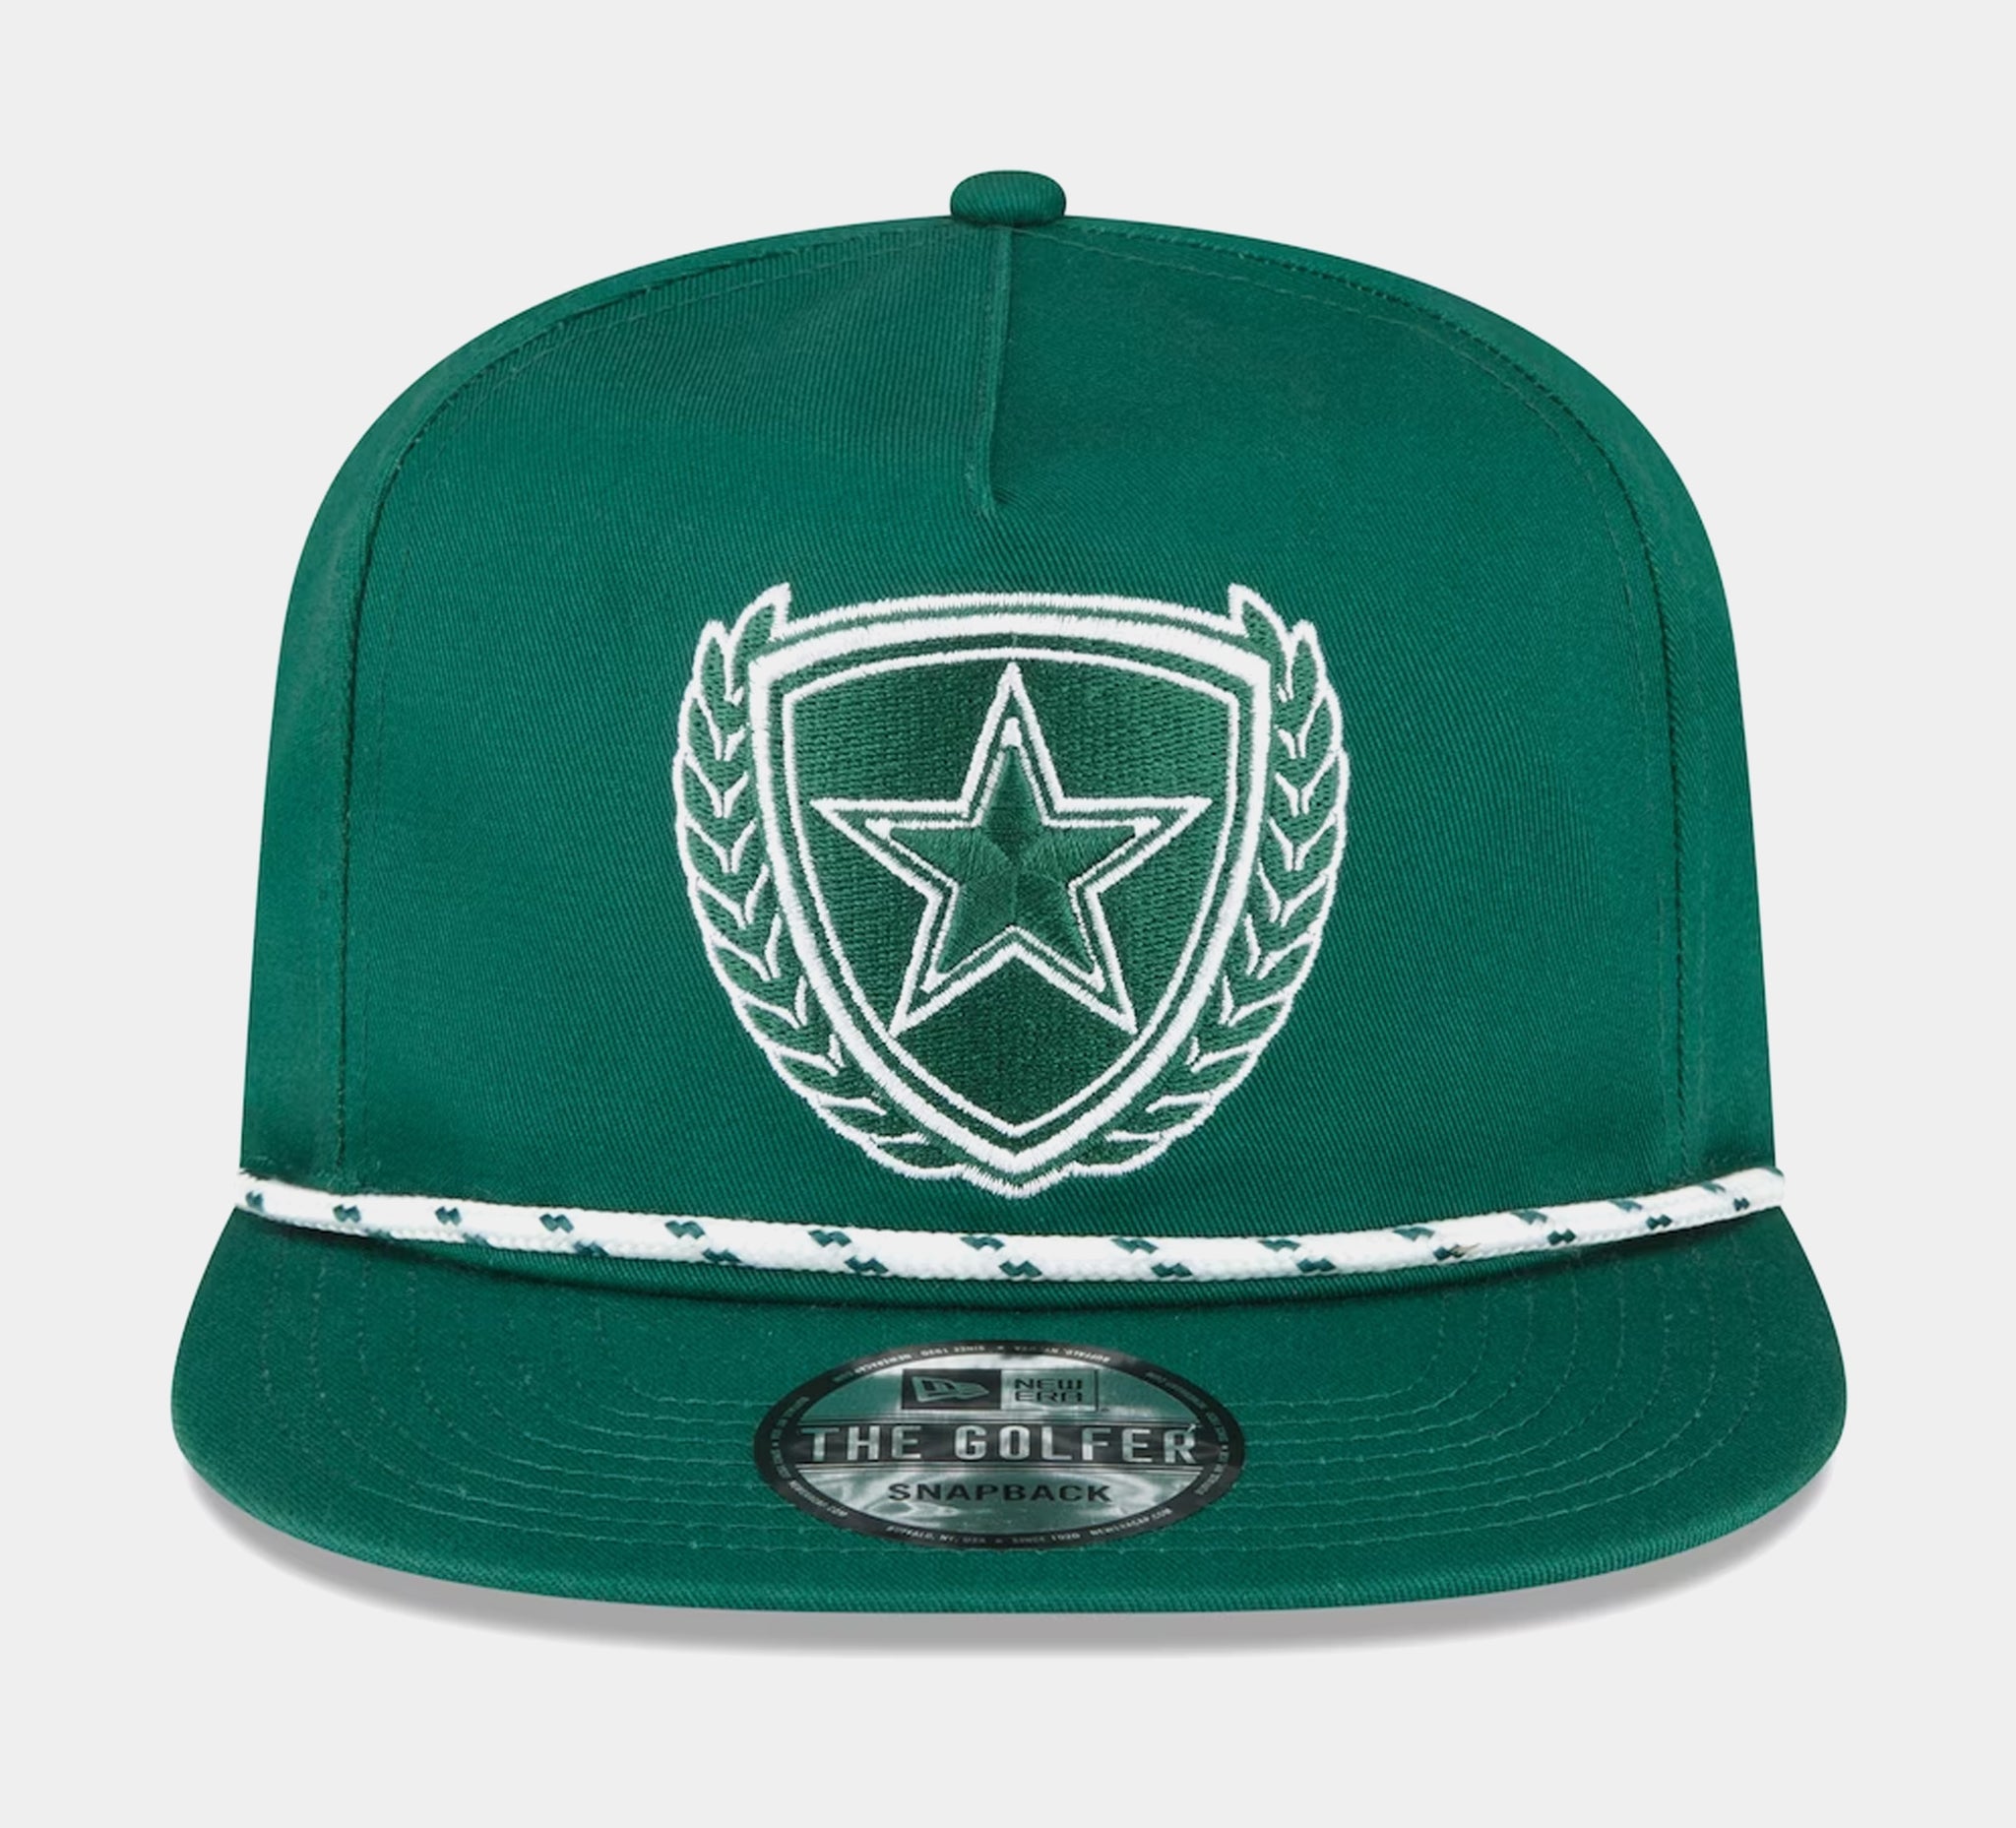 New Era Men's Hat - Green